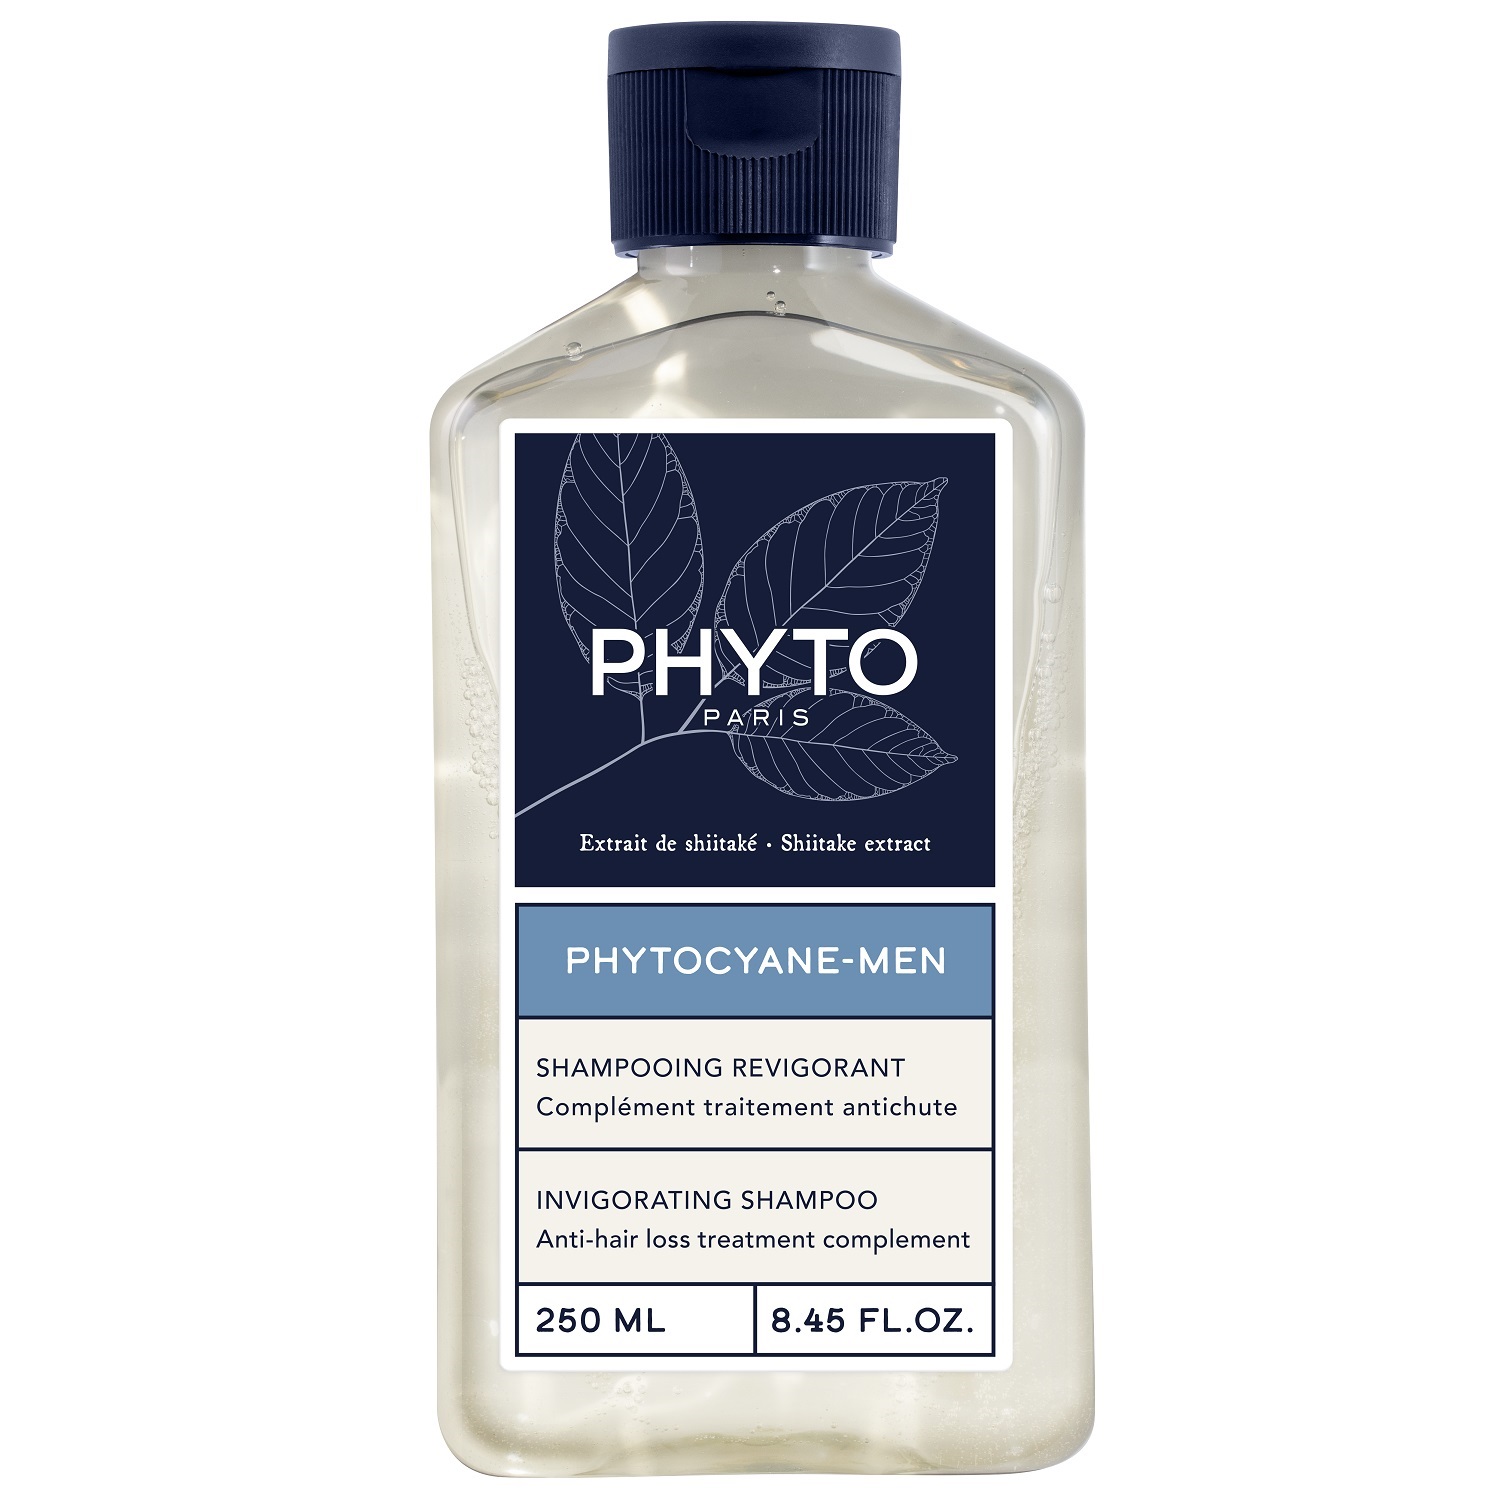 Phyto Мужской укрепляющий шампунь для волос, 250 мл (Phyto, Phytocyane) phyto фитоциан укрепляющий шампунь 100 мл